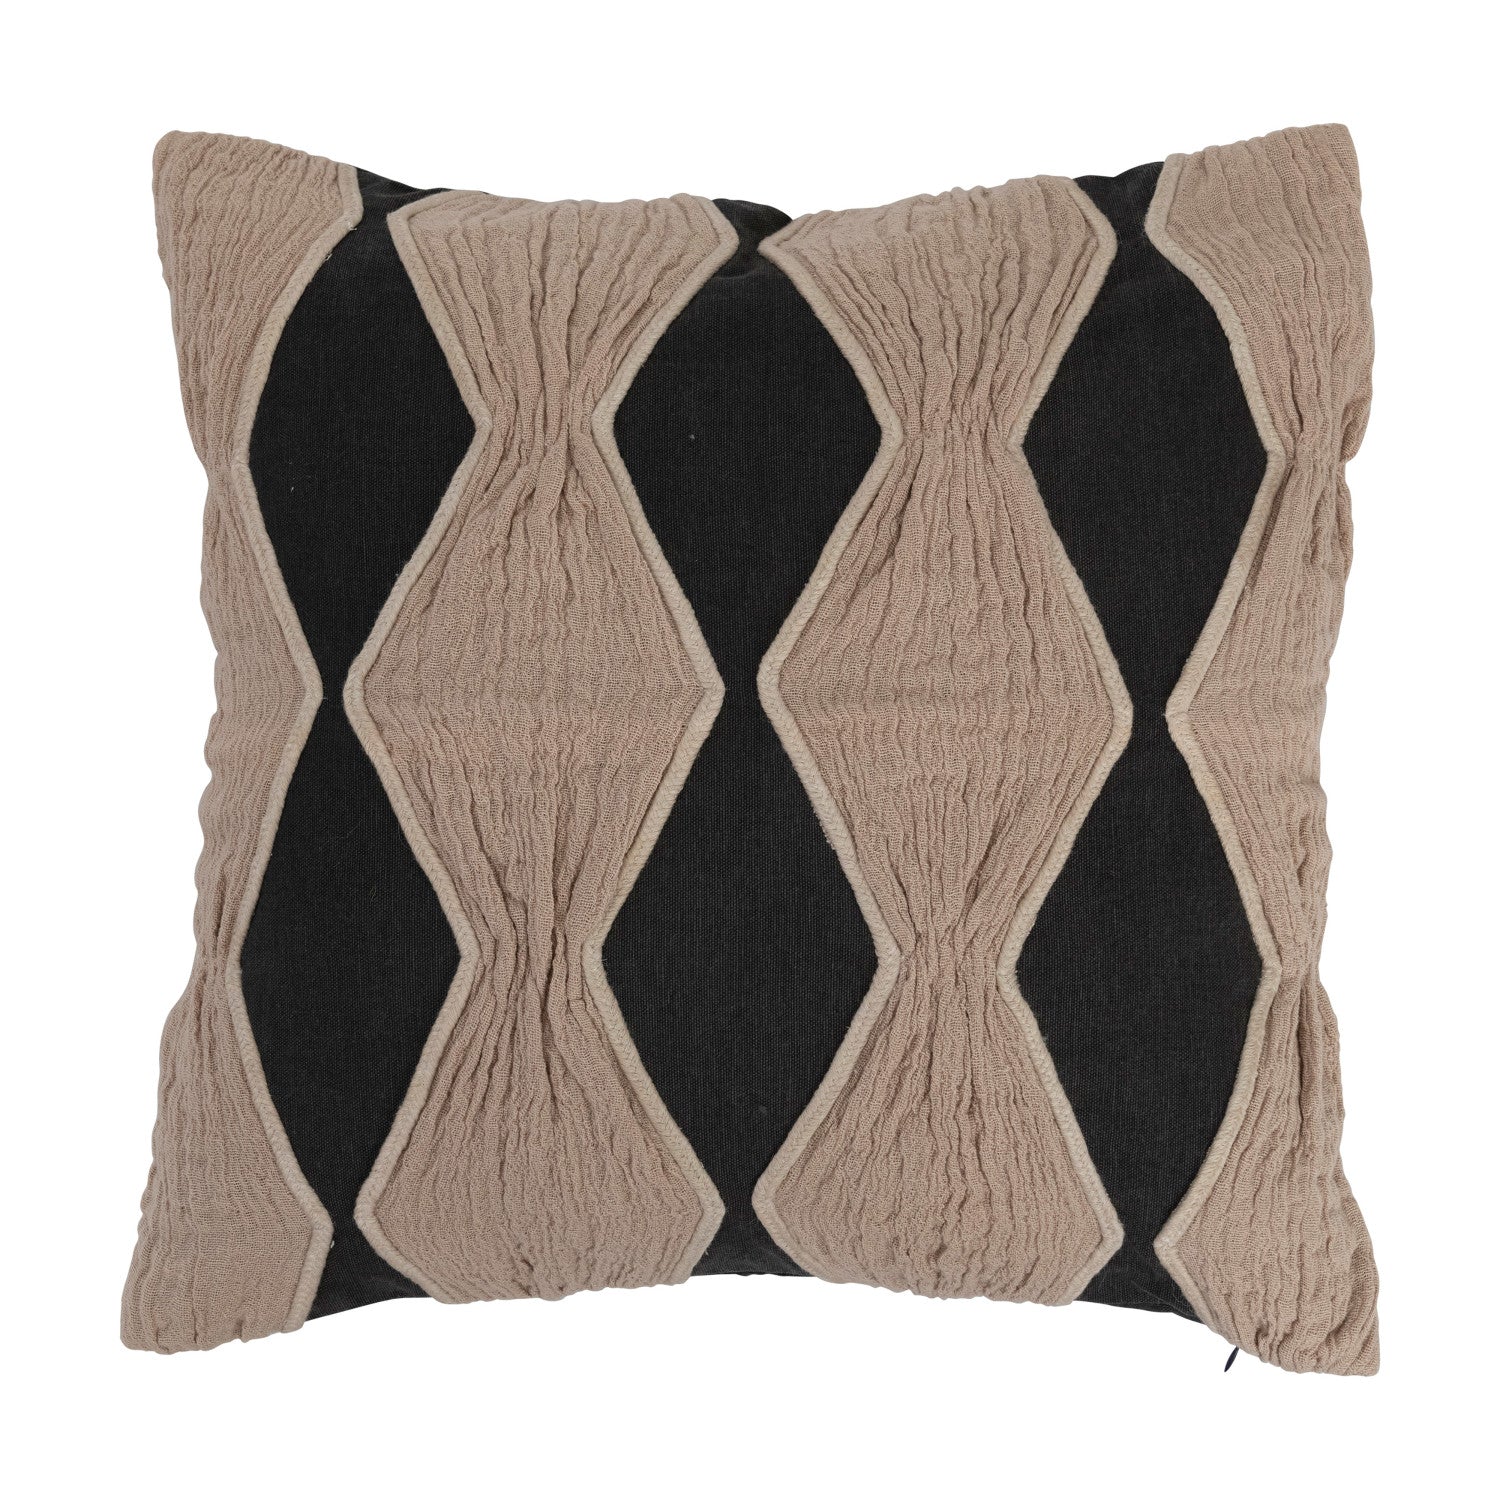 Applique & Diamond Pattern Square Pillow